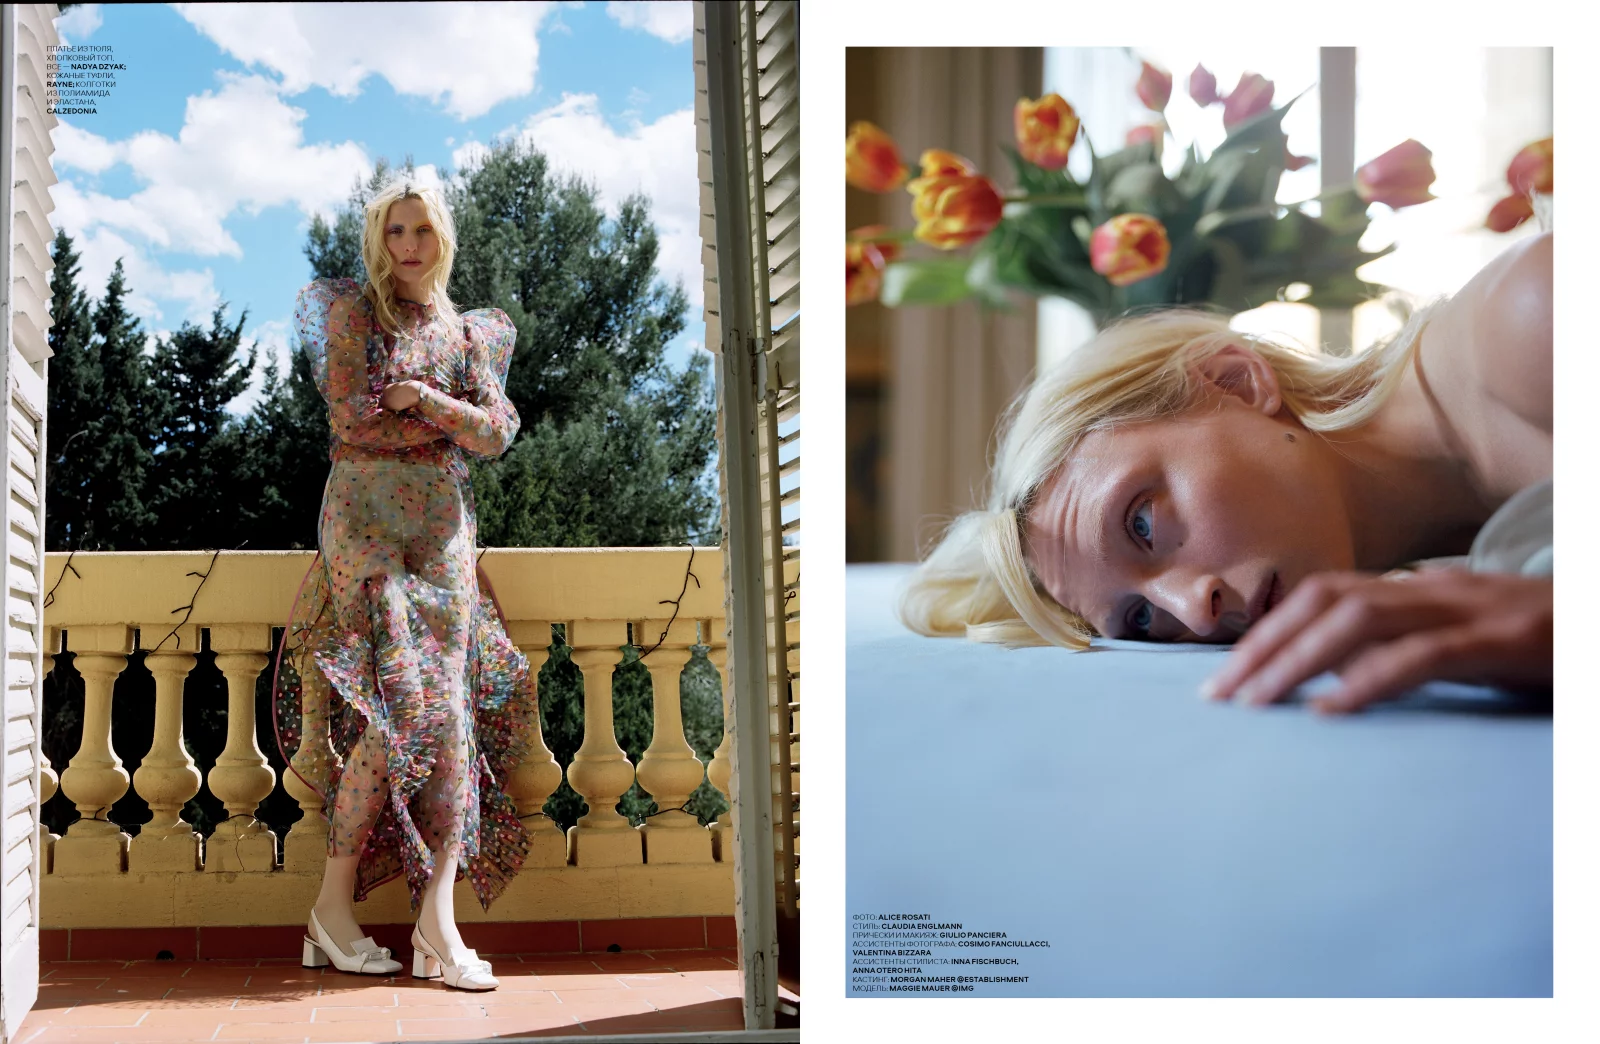 Vogue Ukraine 6 by Claudia ENGLMANN